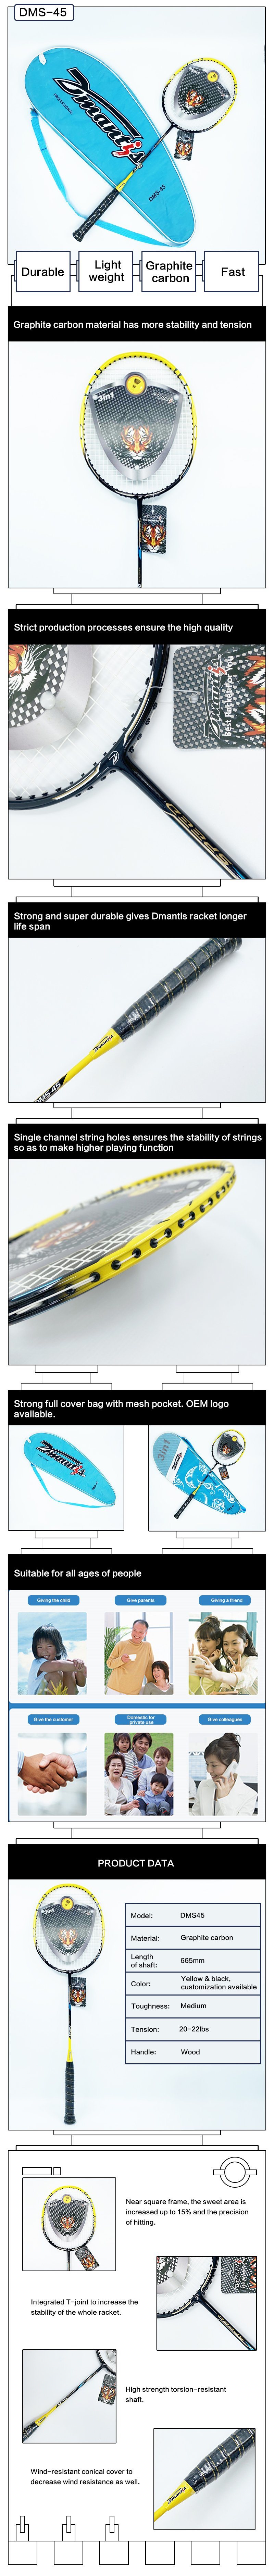 New Design Unique Training Fiber Carbon Hot Selling Racket Badminton